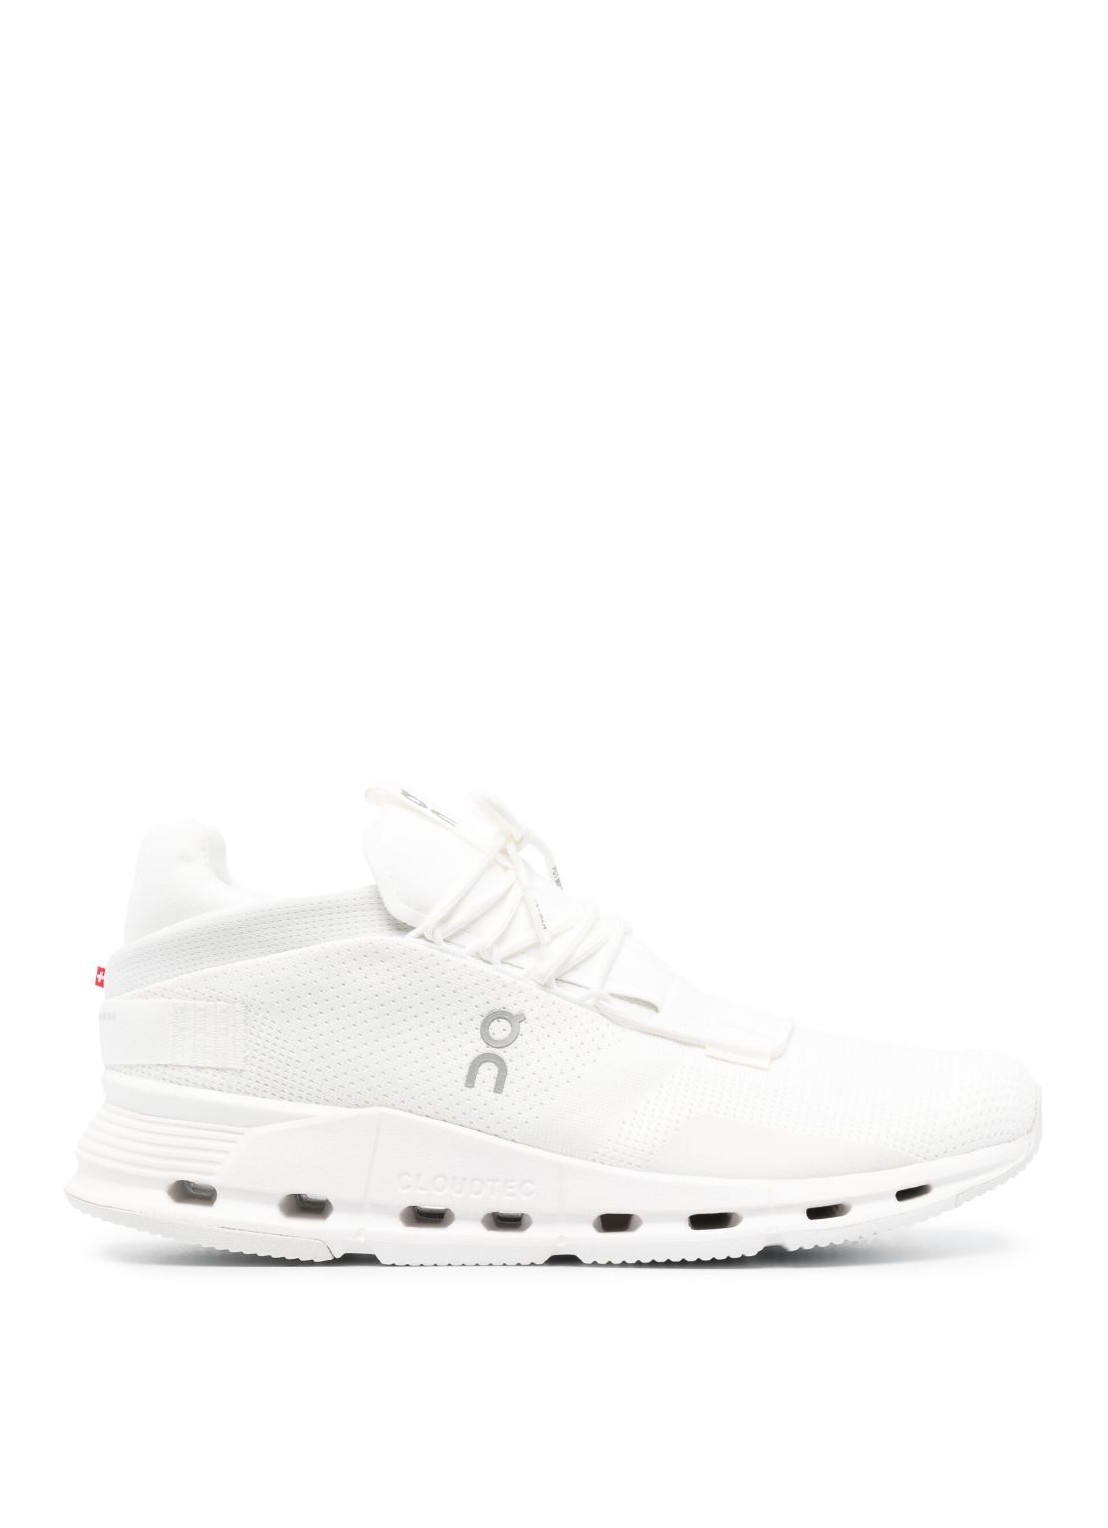 Sneaker on running sneaker man cloudnova 2698227 undyed white white talla 44
 